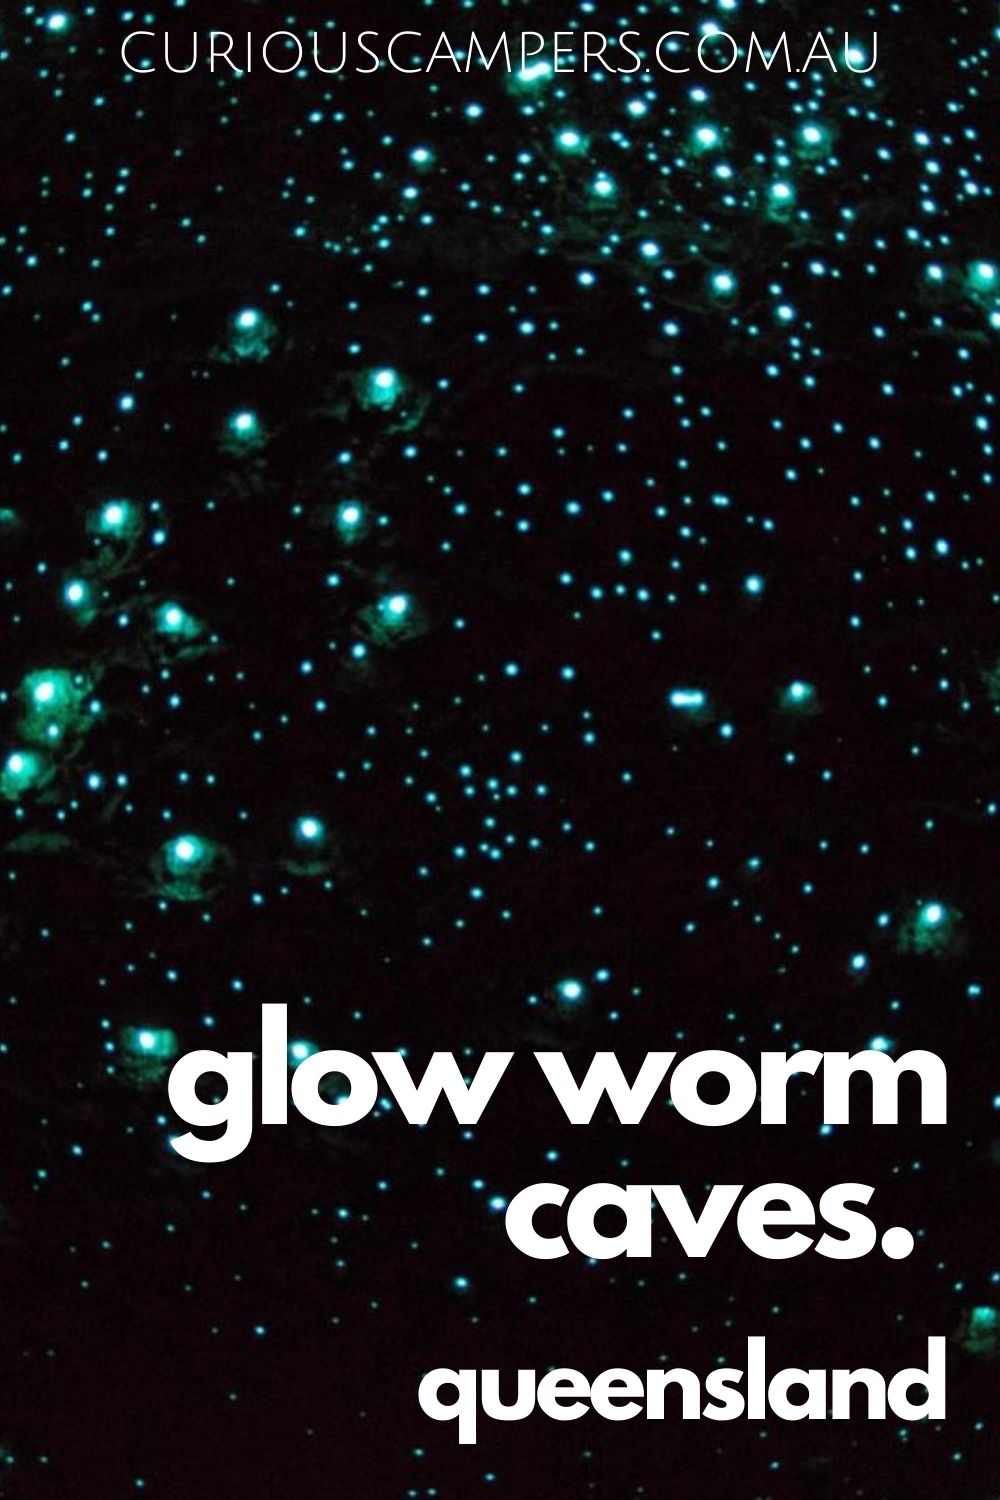 Tamborine Mountain glow worm caves